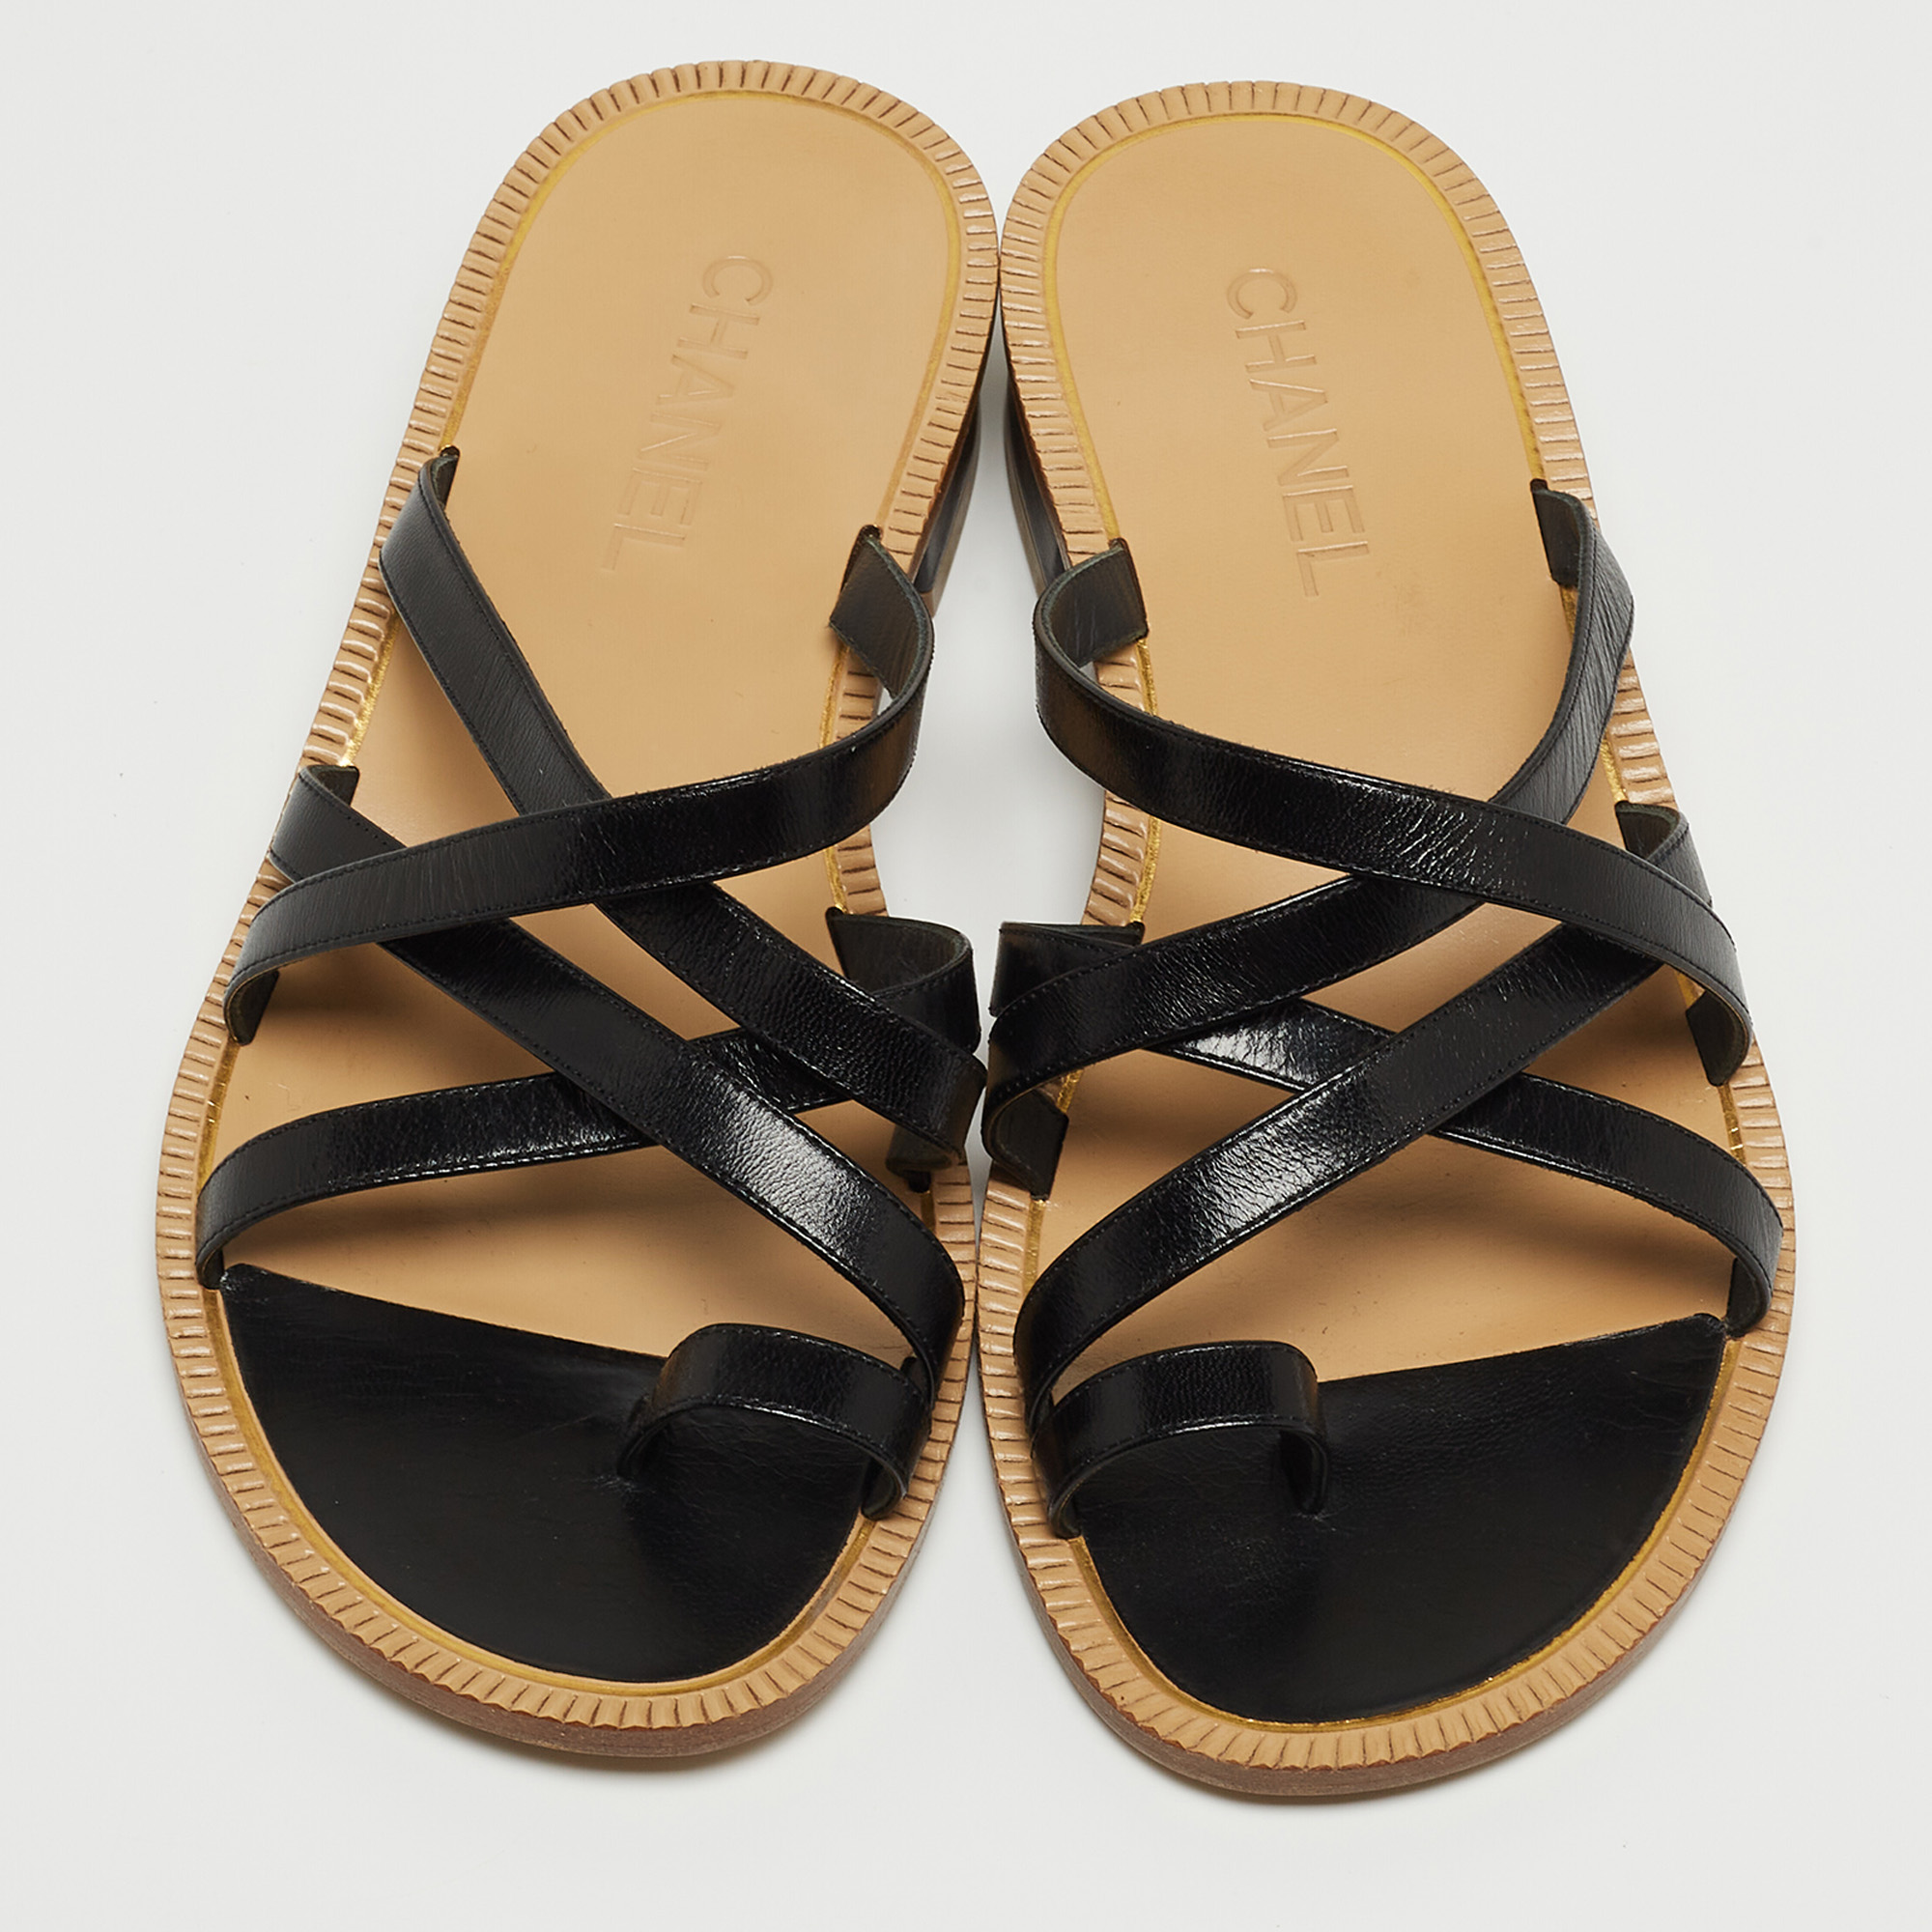 Chanel Black Leather Criss Cross Slide Sandals Size 39